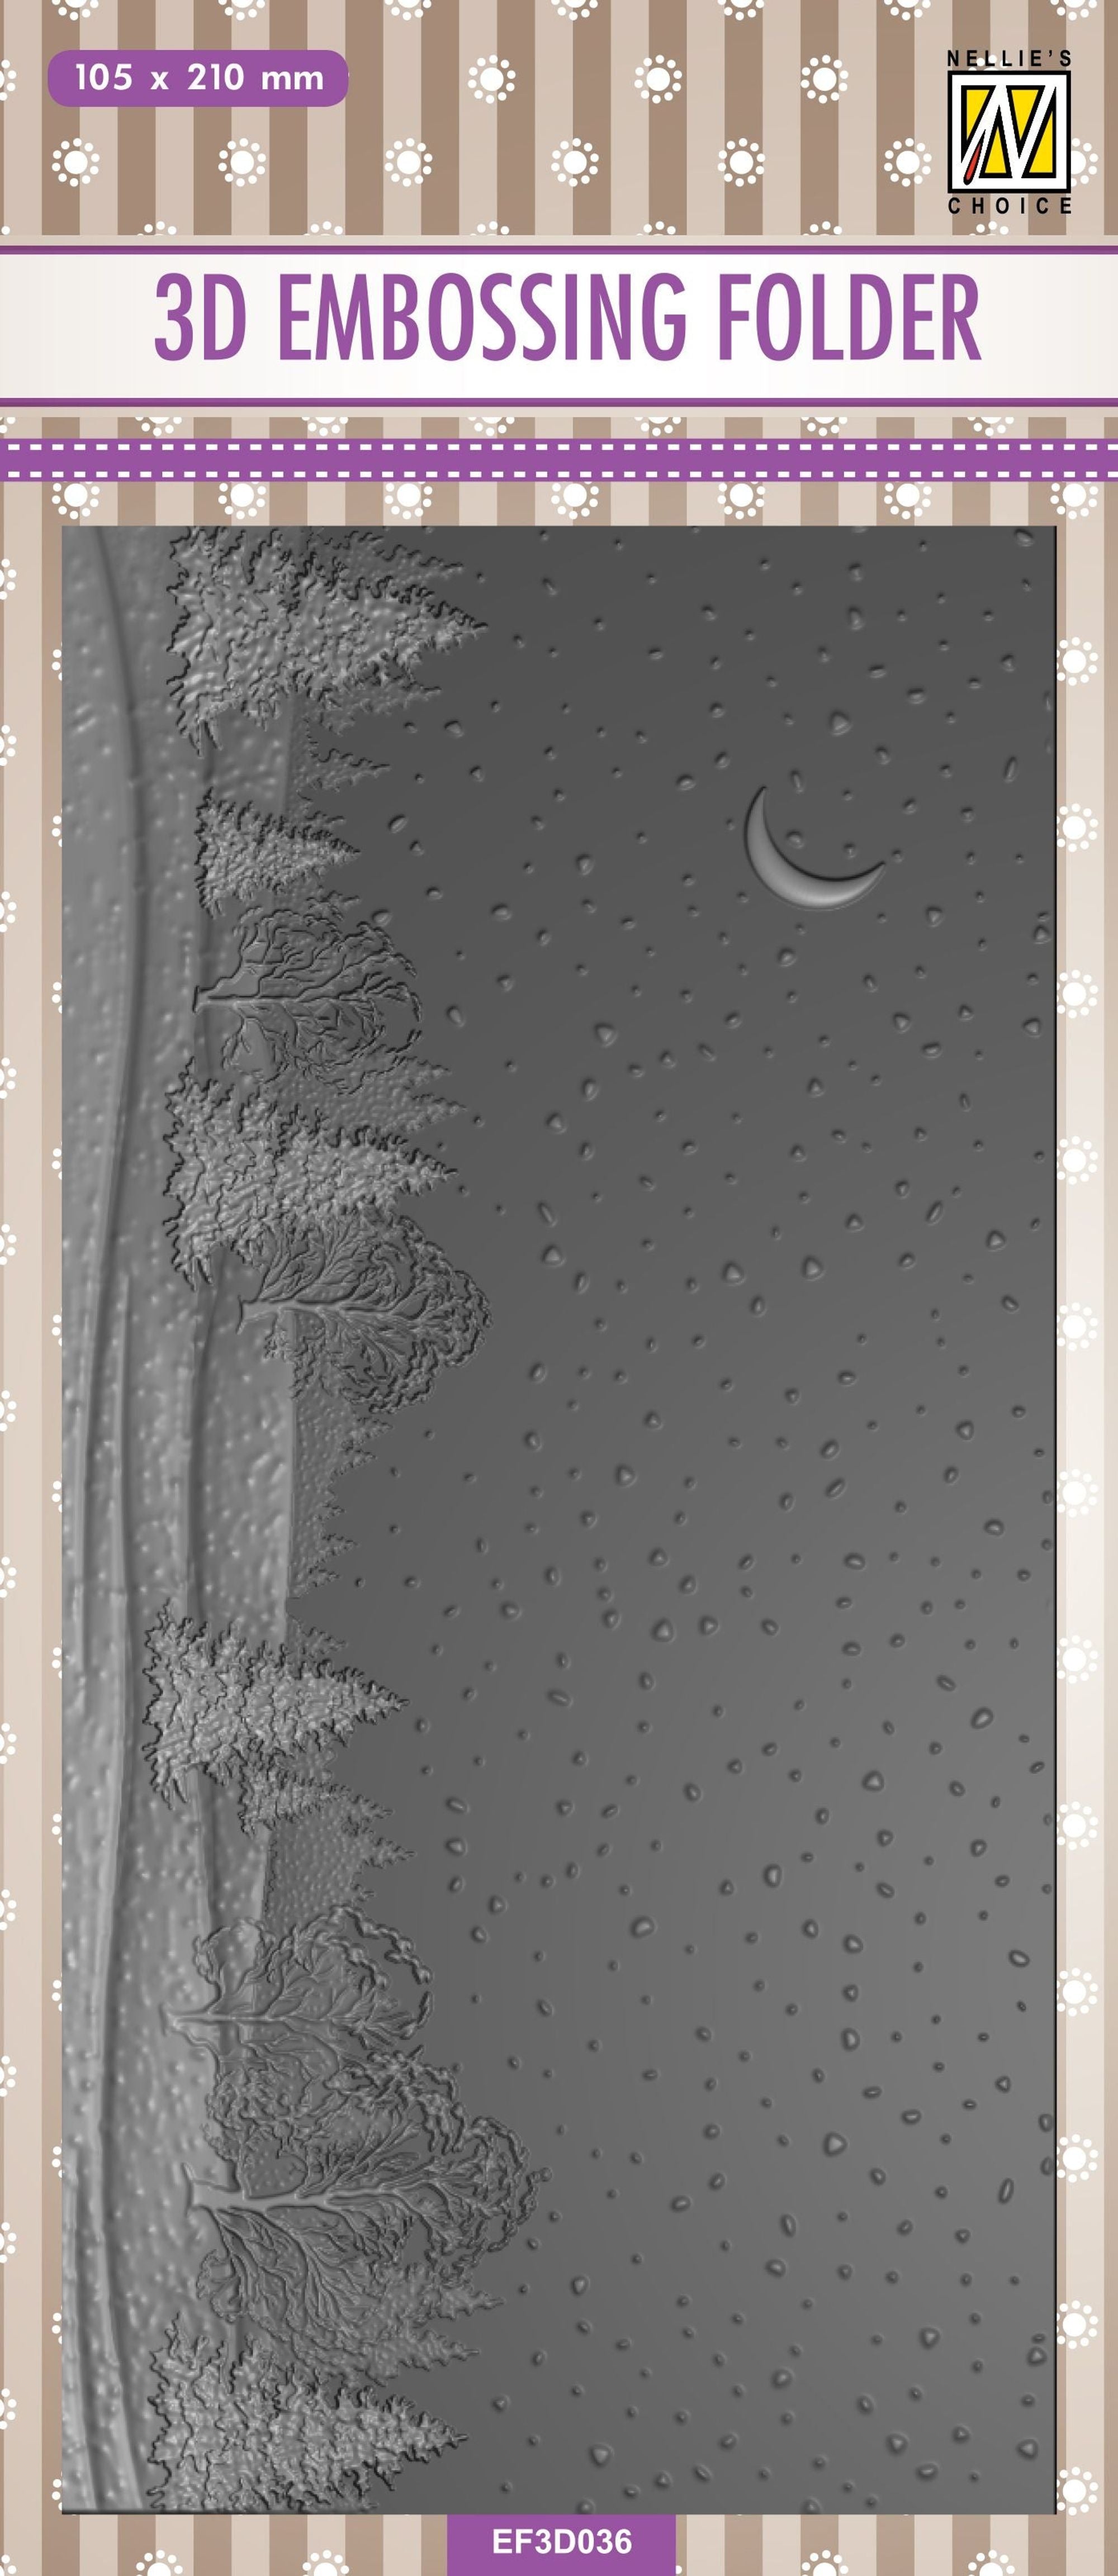 Nellie's Choice 3D Embossing Folder Slimline Size - Snowy Landscape